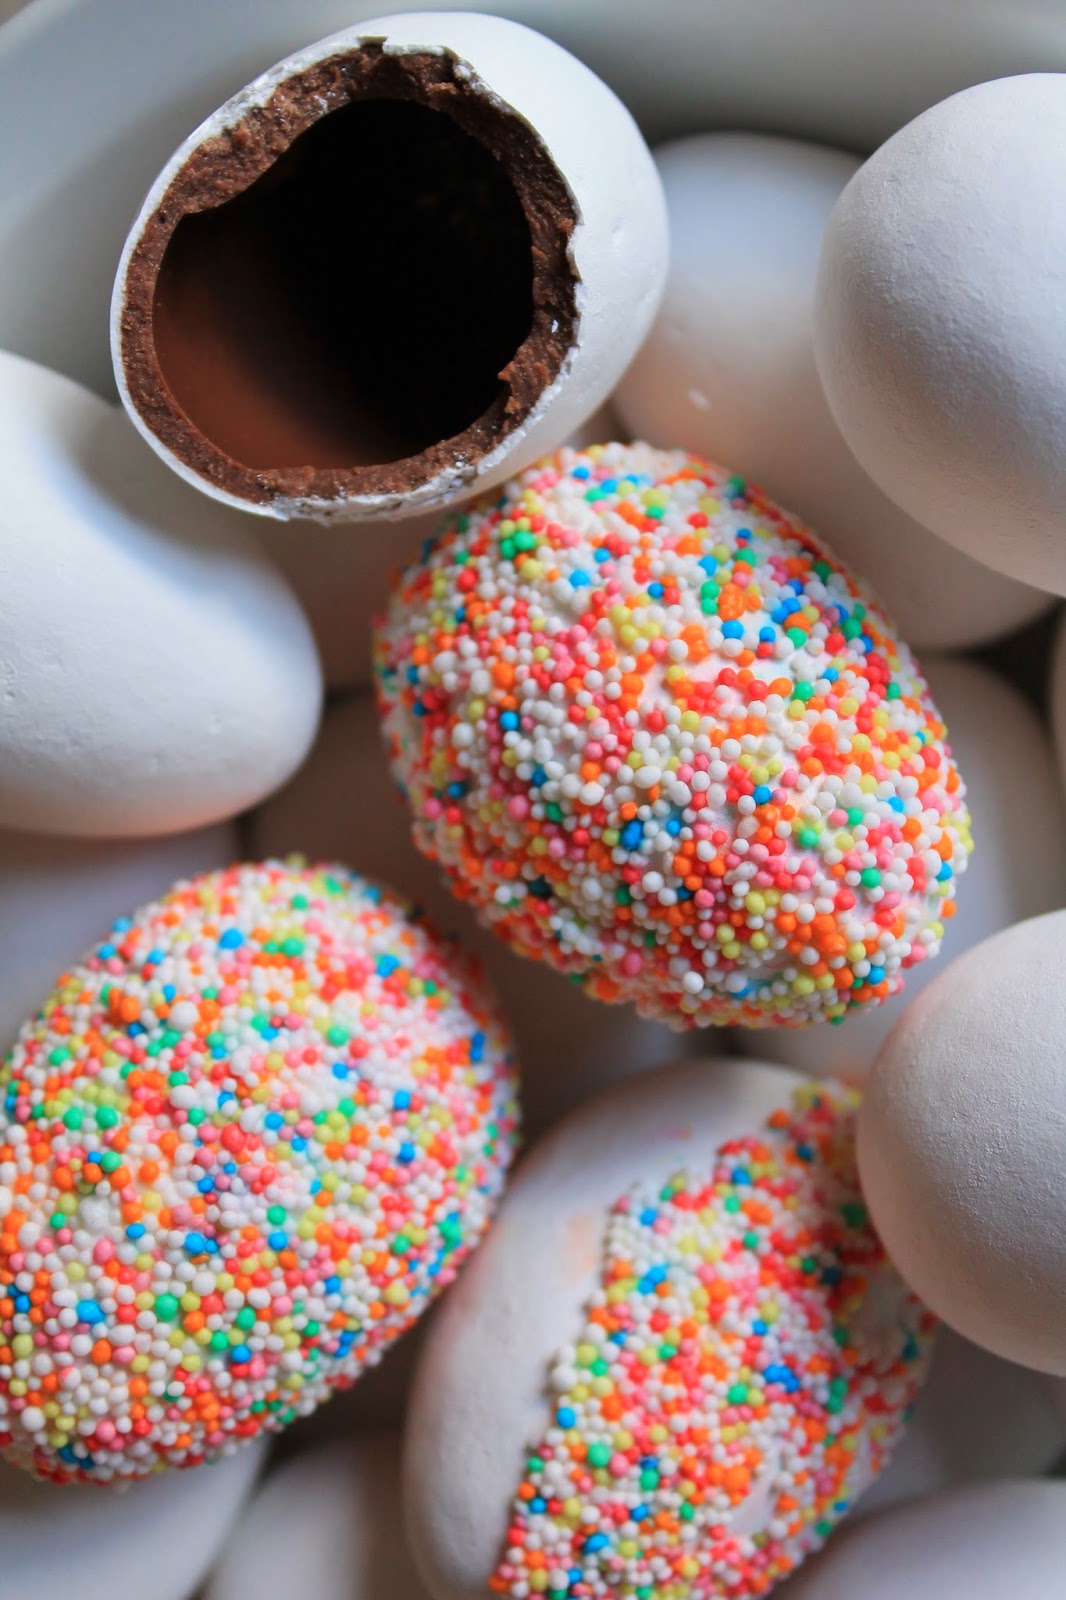 MakingMamaMagic: Candy-coated chocolate eggs